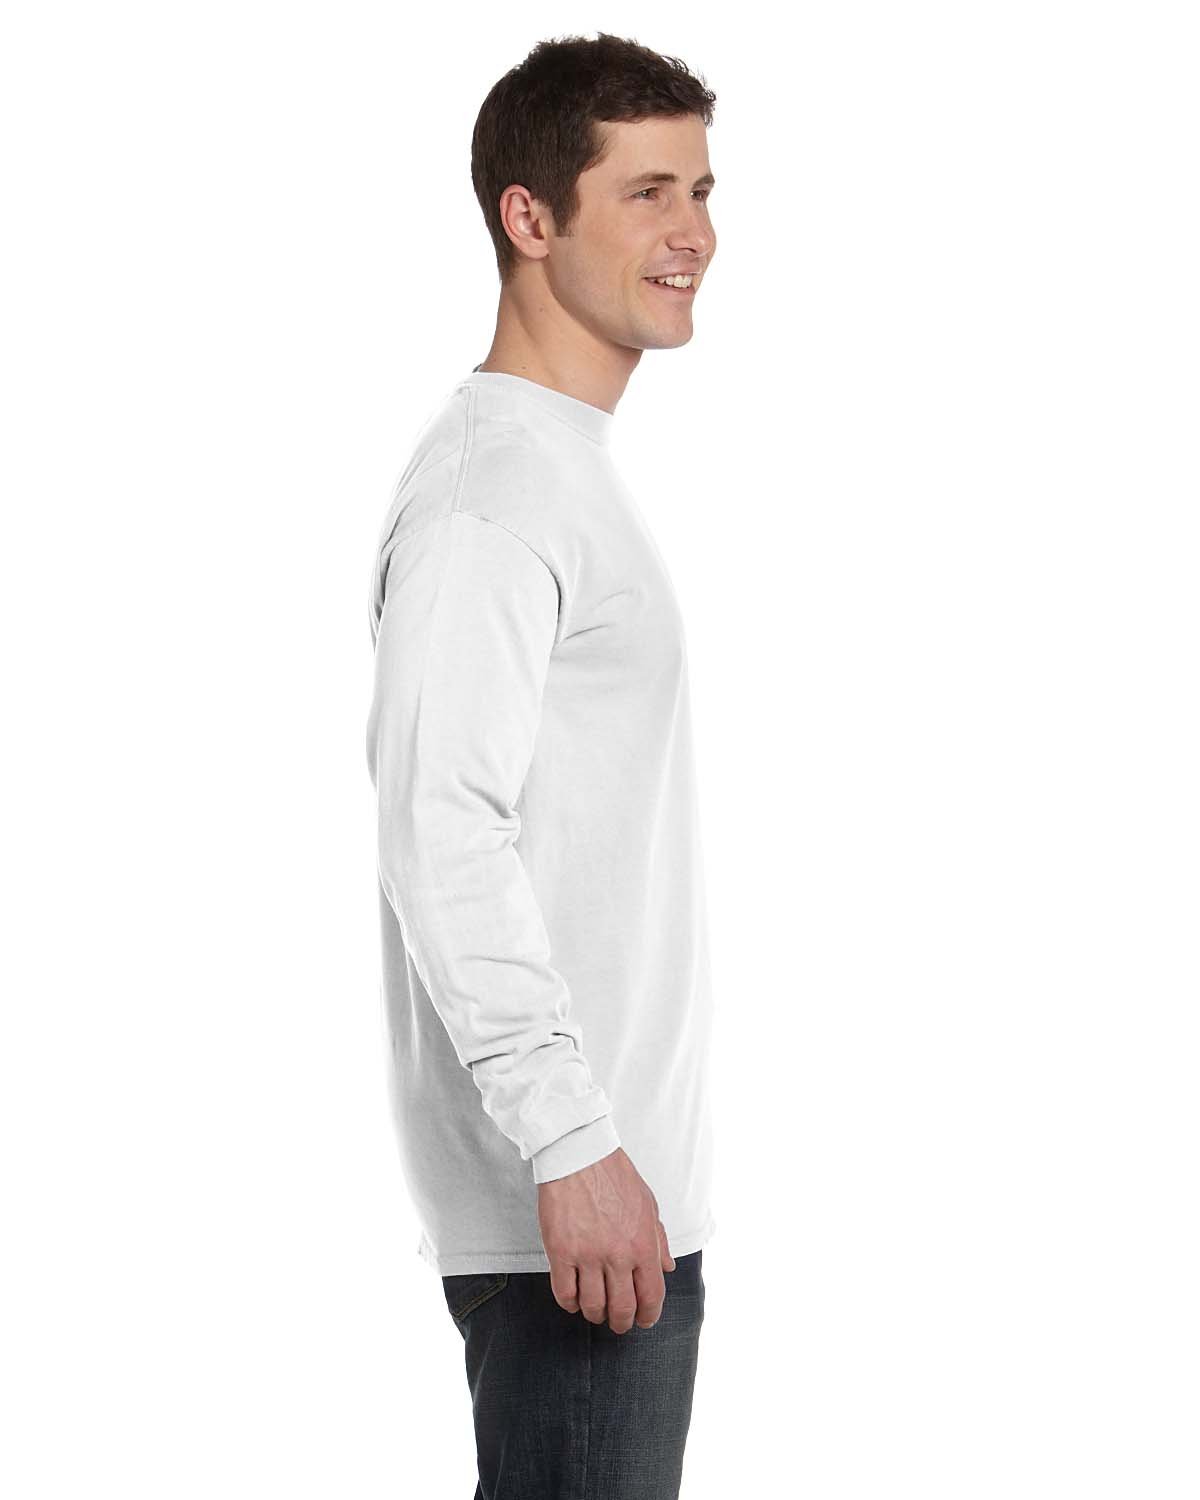 Comfort Colors 6.1 oz. Ringspun Garment-Dyed T-Shirt S PEPPER